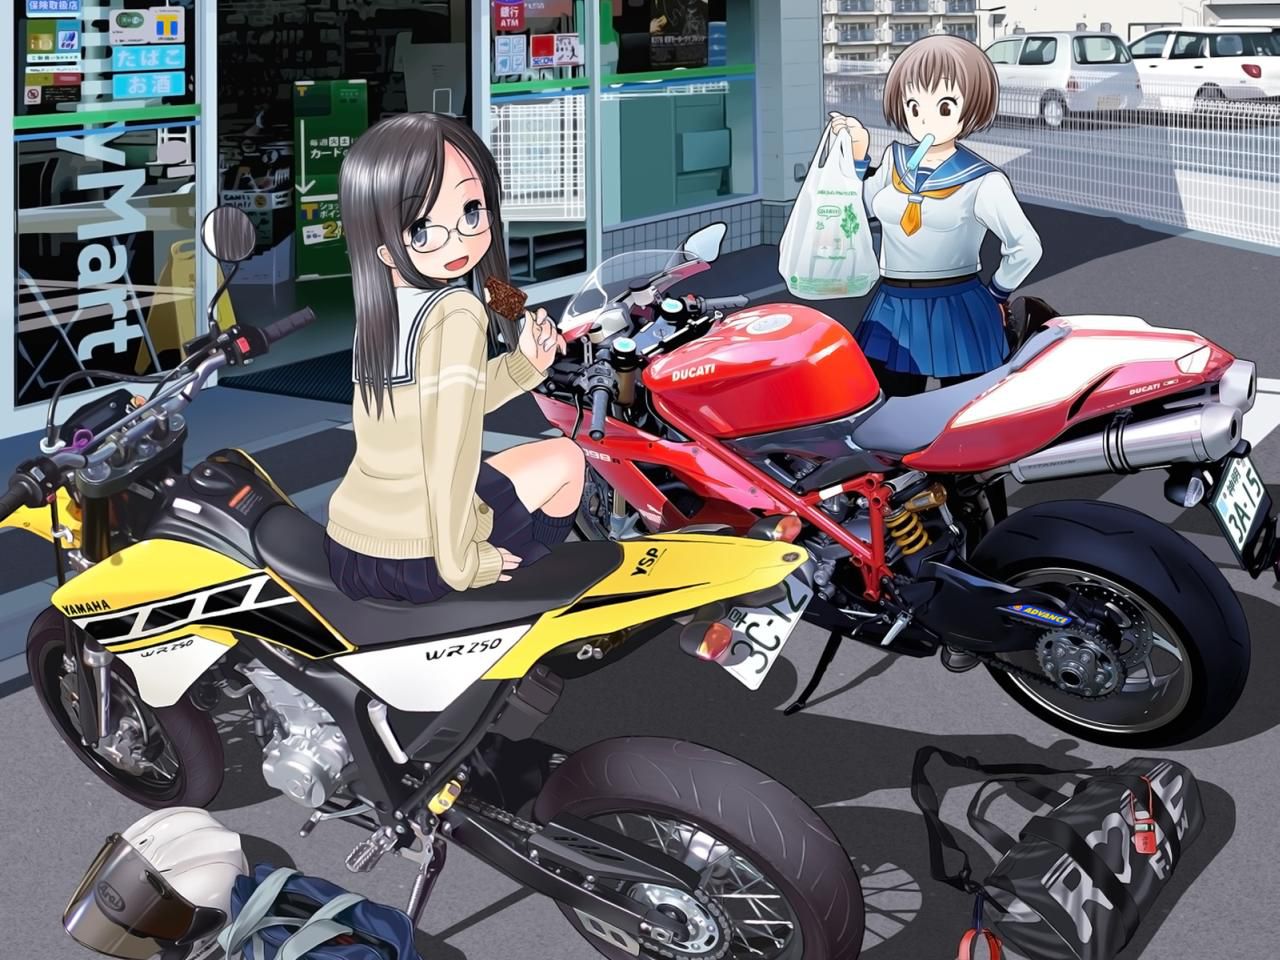 [Secondary] 可愛kattari, sometimes to cool girls riding bikes pictures 20